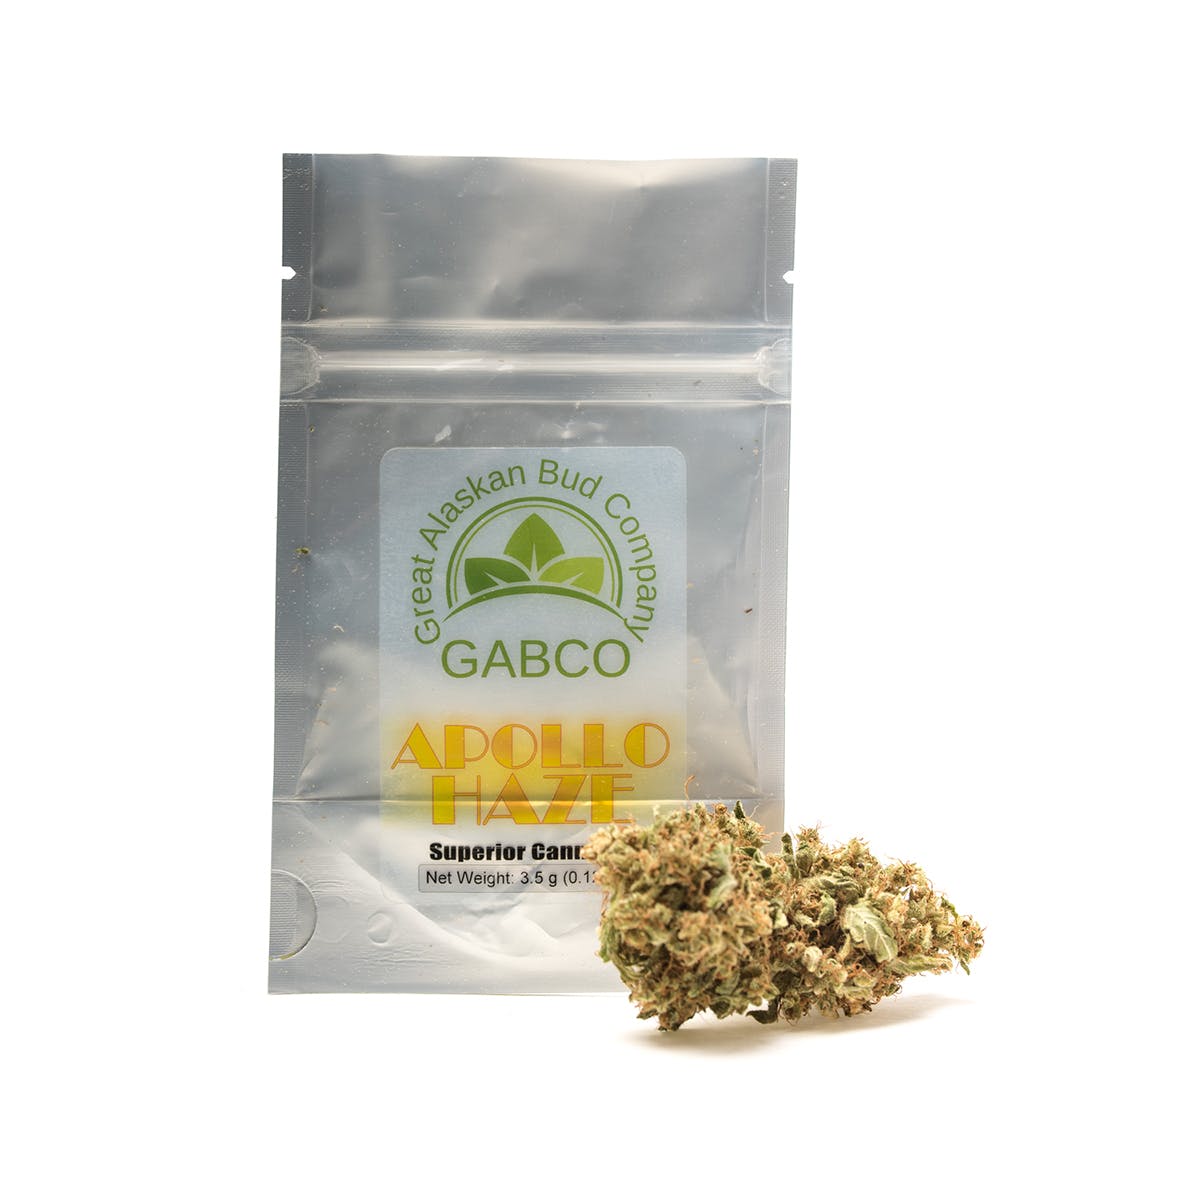 marijuana-dispensaries-great-alaskan-bud-company-gabco-in-fairbanks-apollo-haze